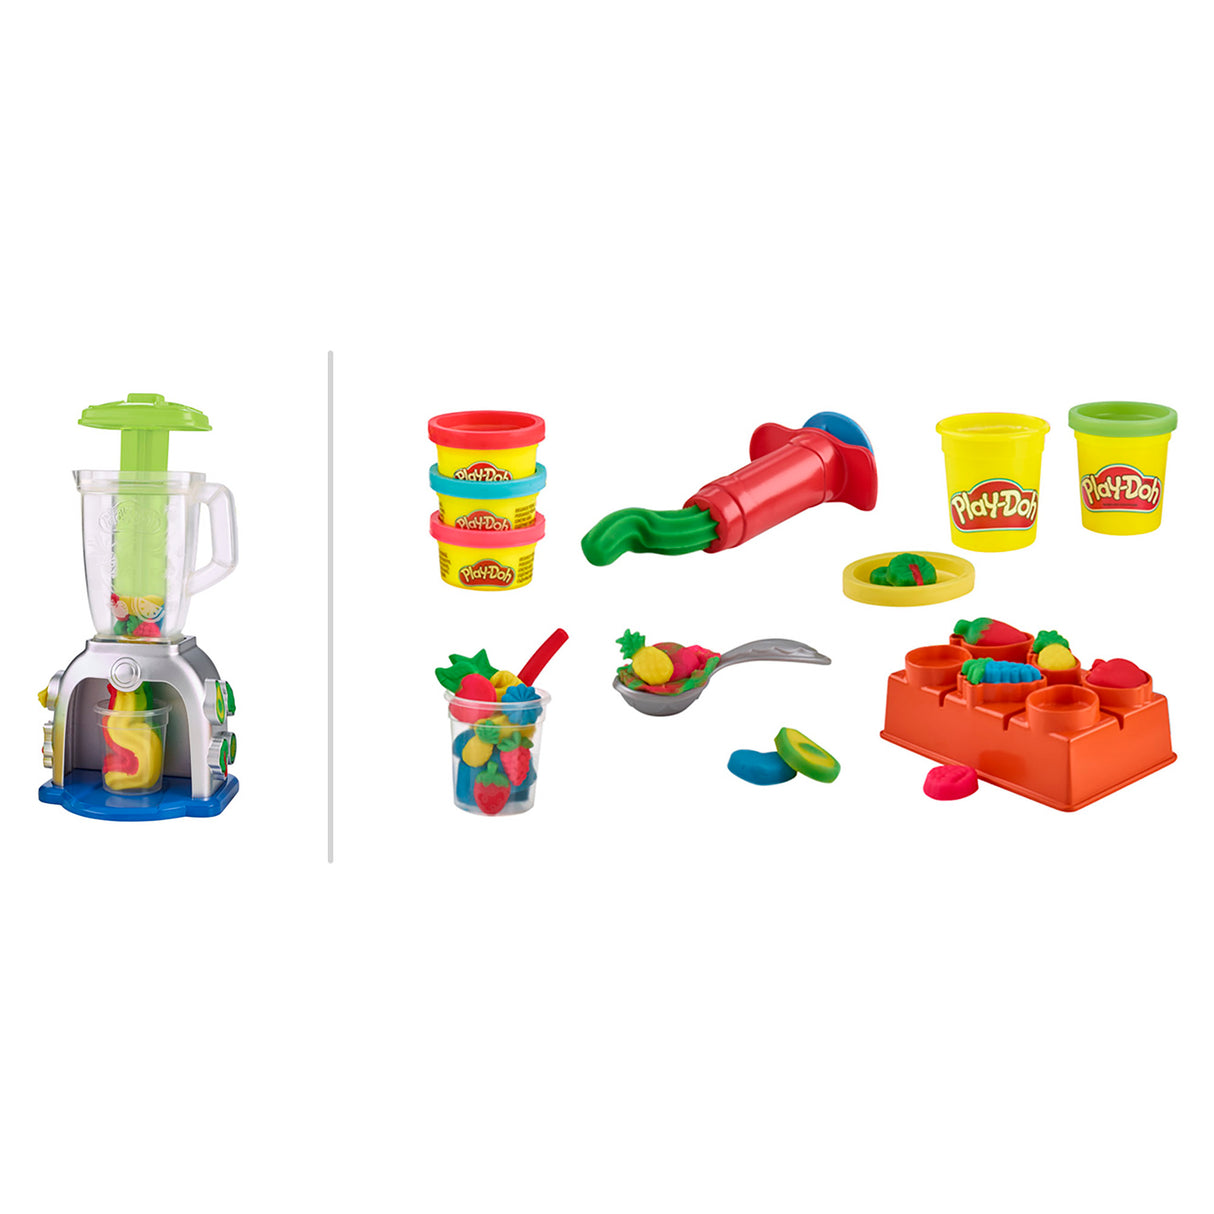 Play-Doh Swirlin Smoothies Blender Playset